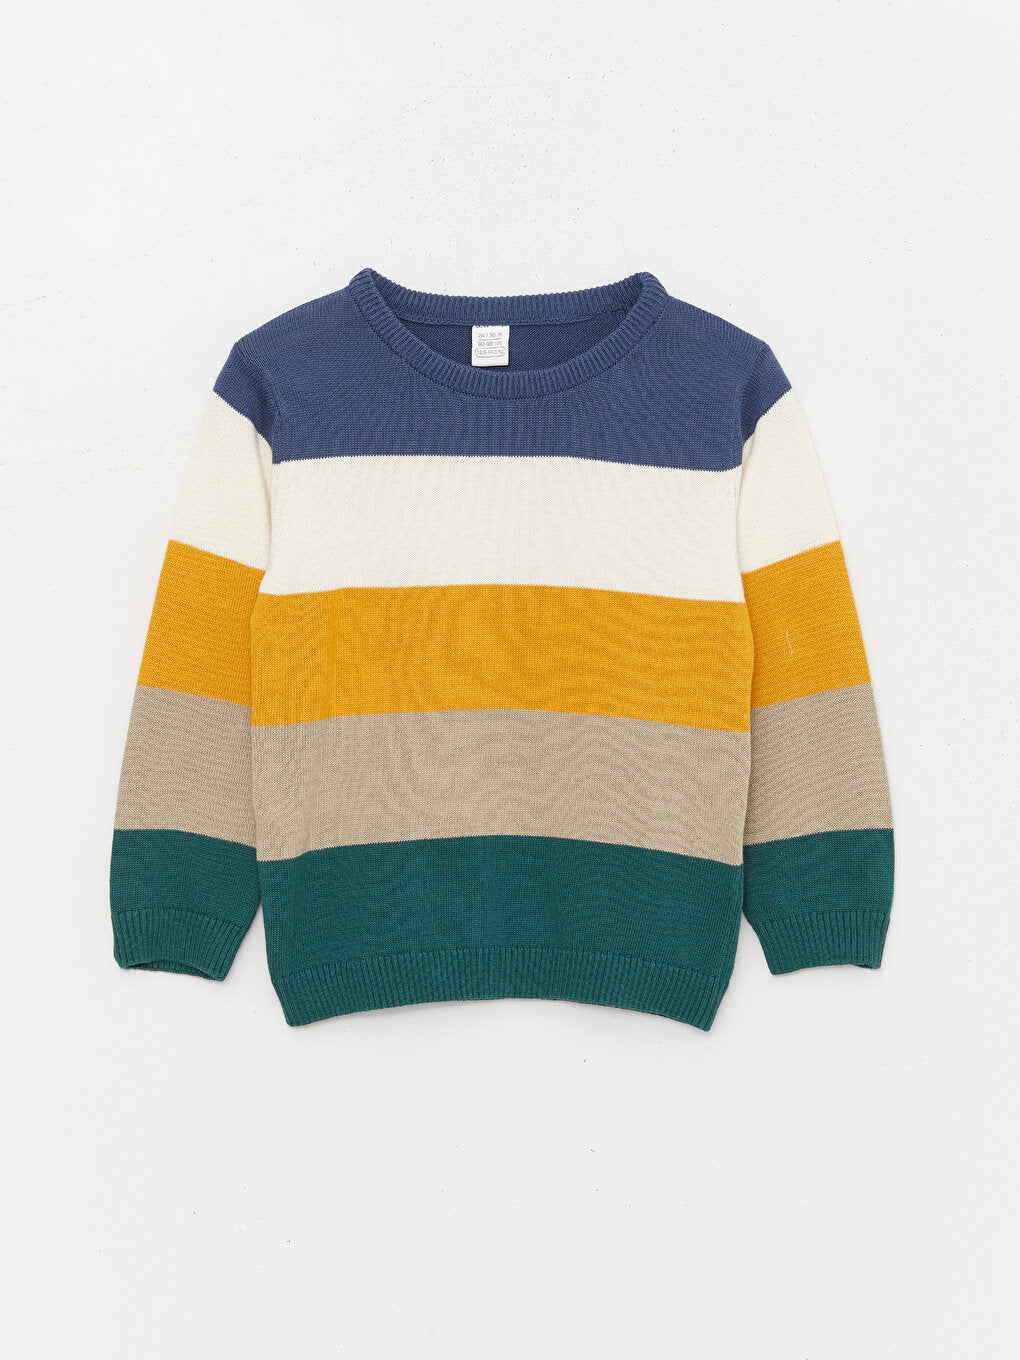 Crew Neck Long Sleeve Color Blocked Baby Boy Knitwear Sweater